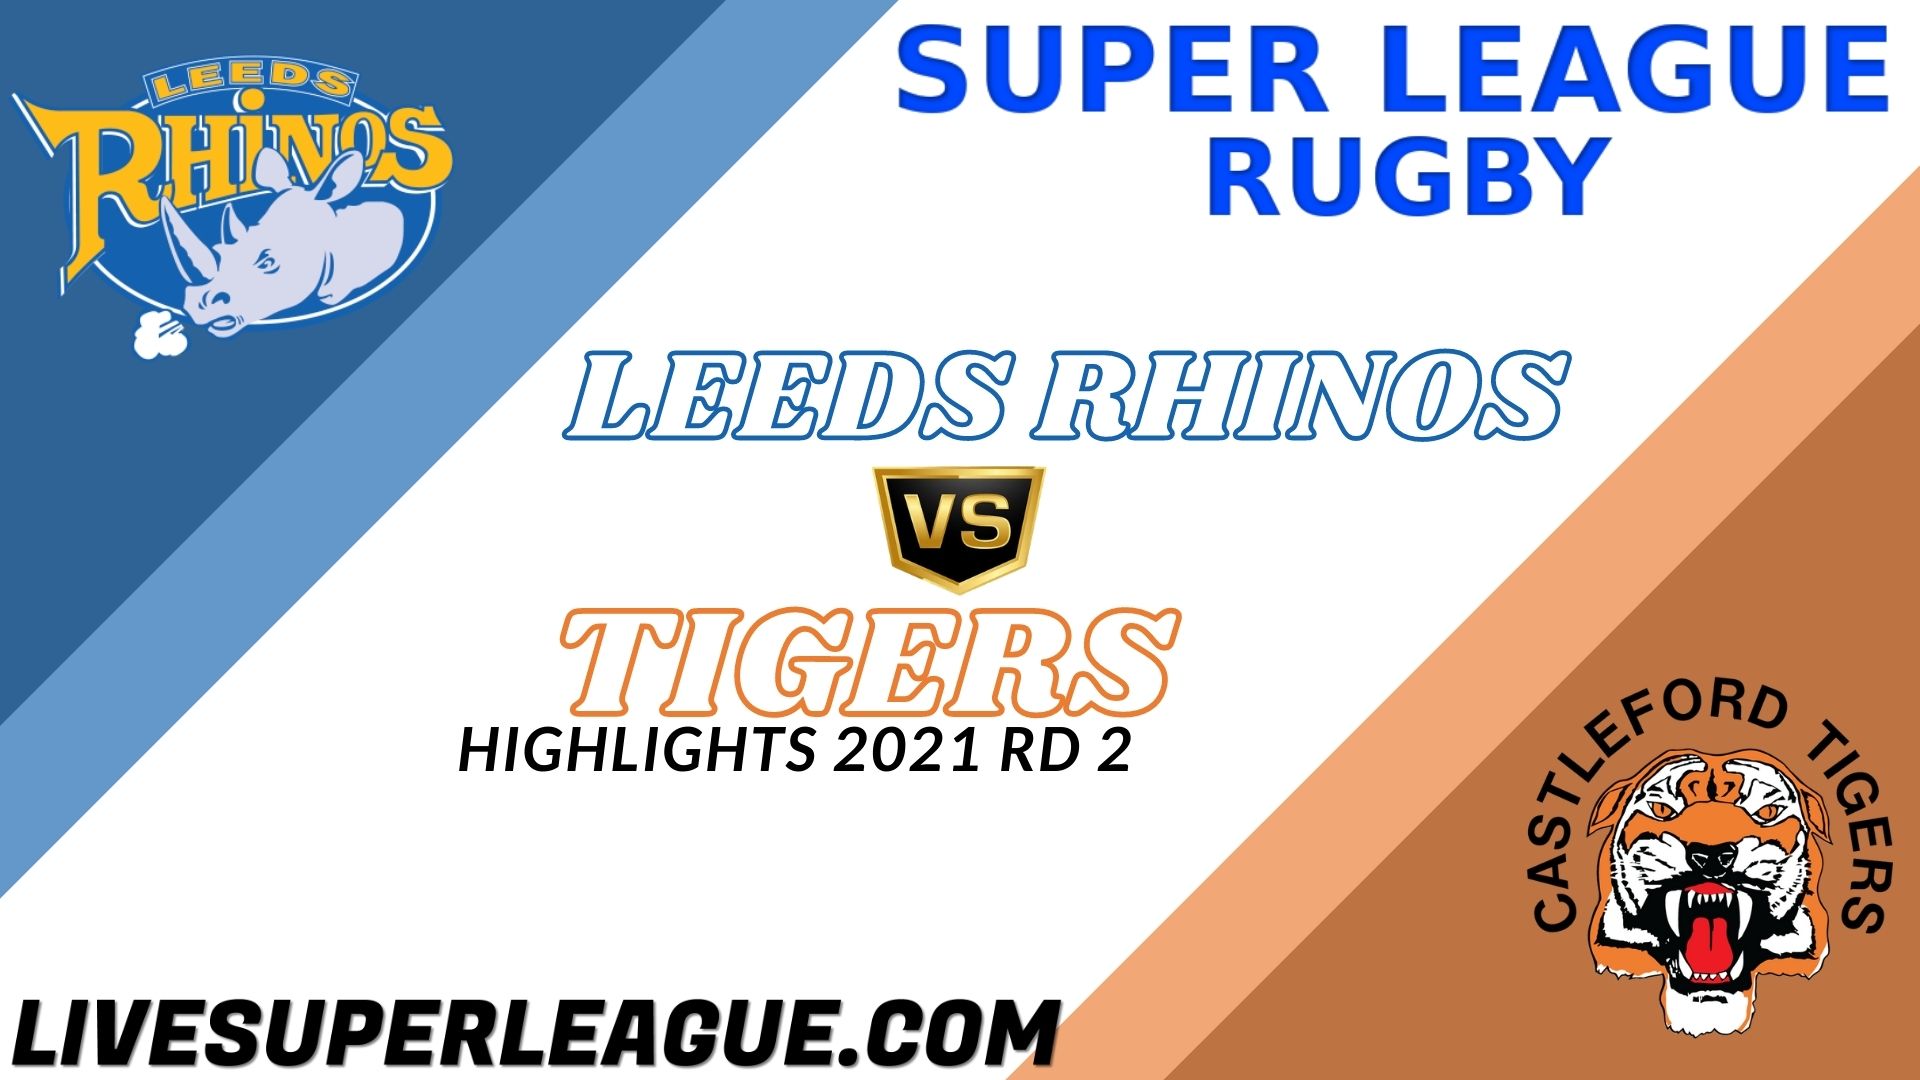 Leeds Rhinos Vs Tigers Highlights 2021